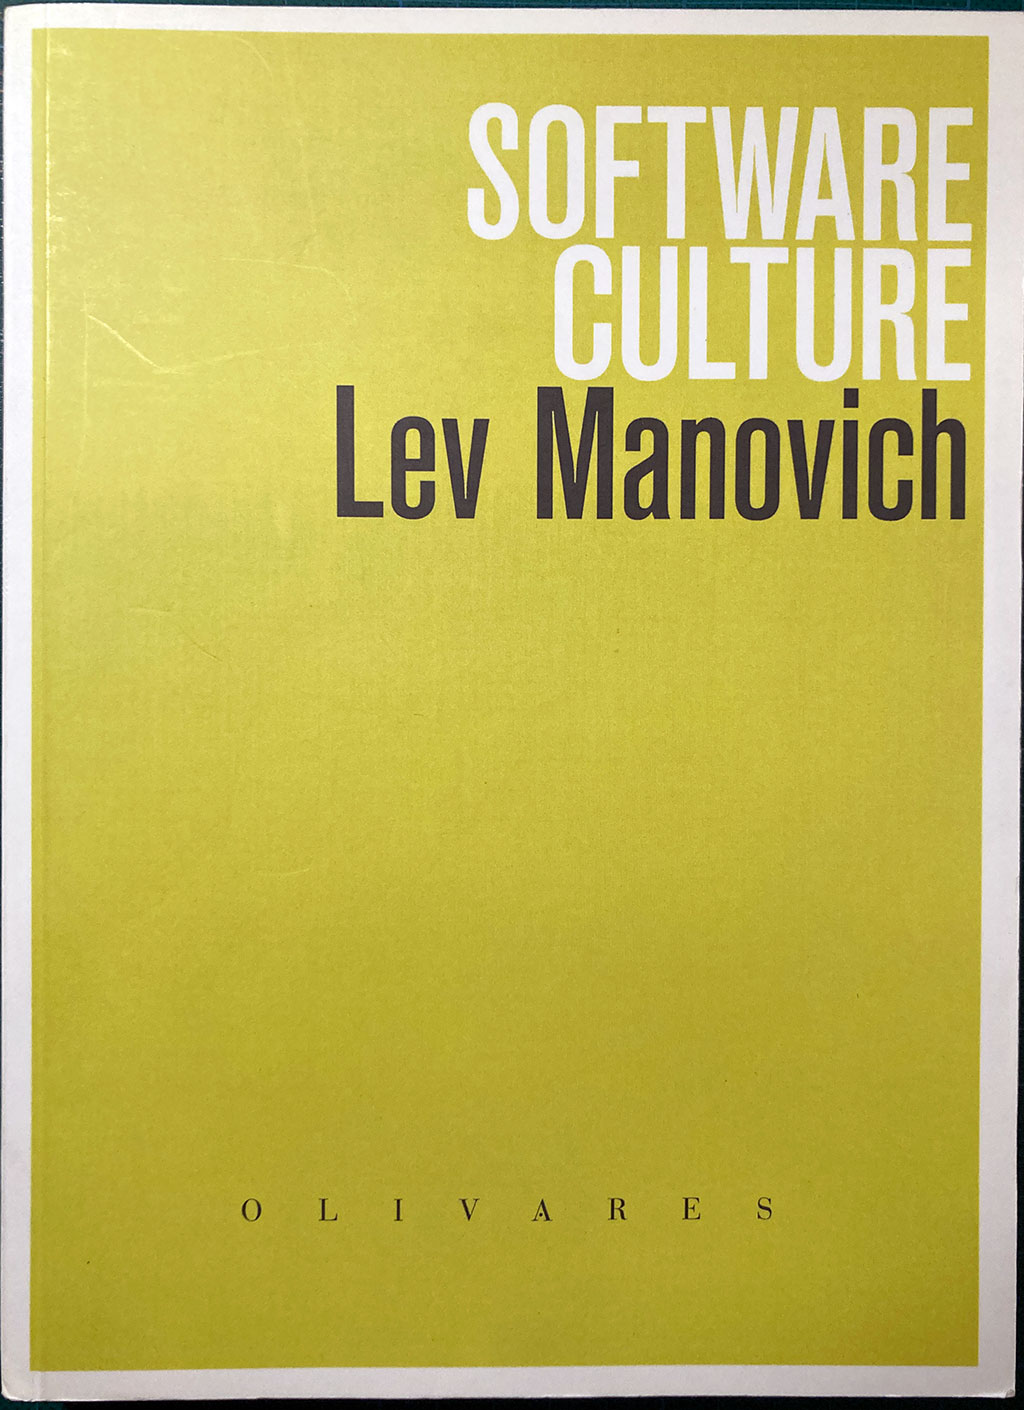 Software culture Book Cover